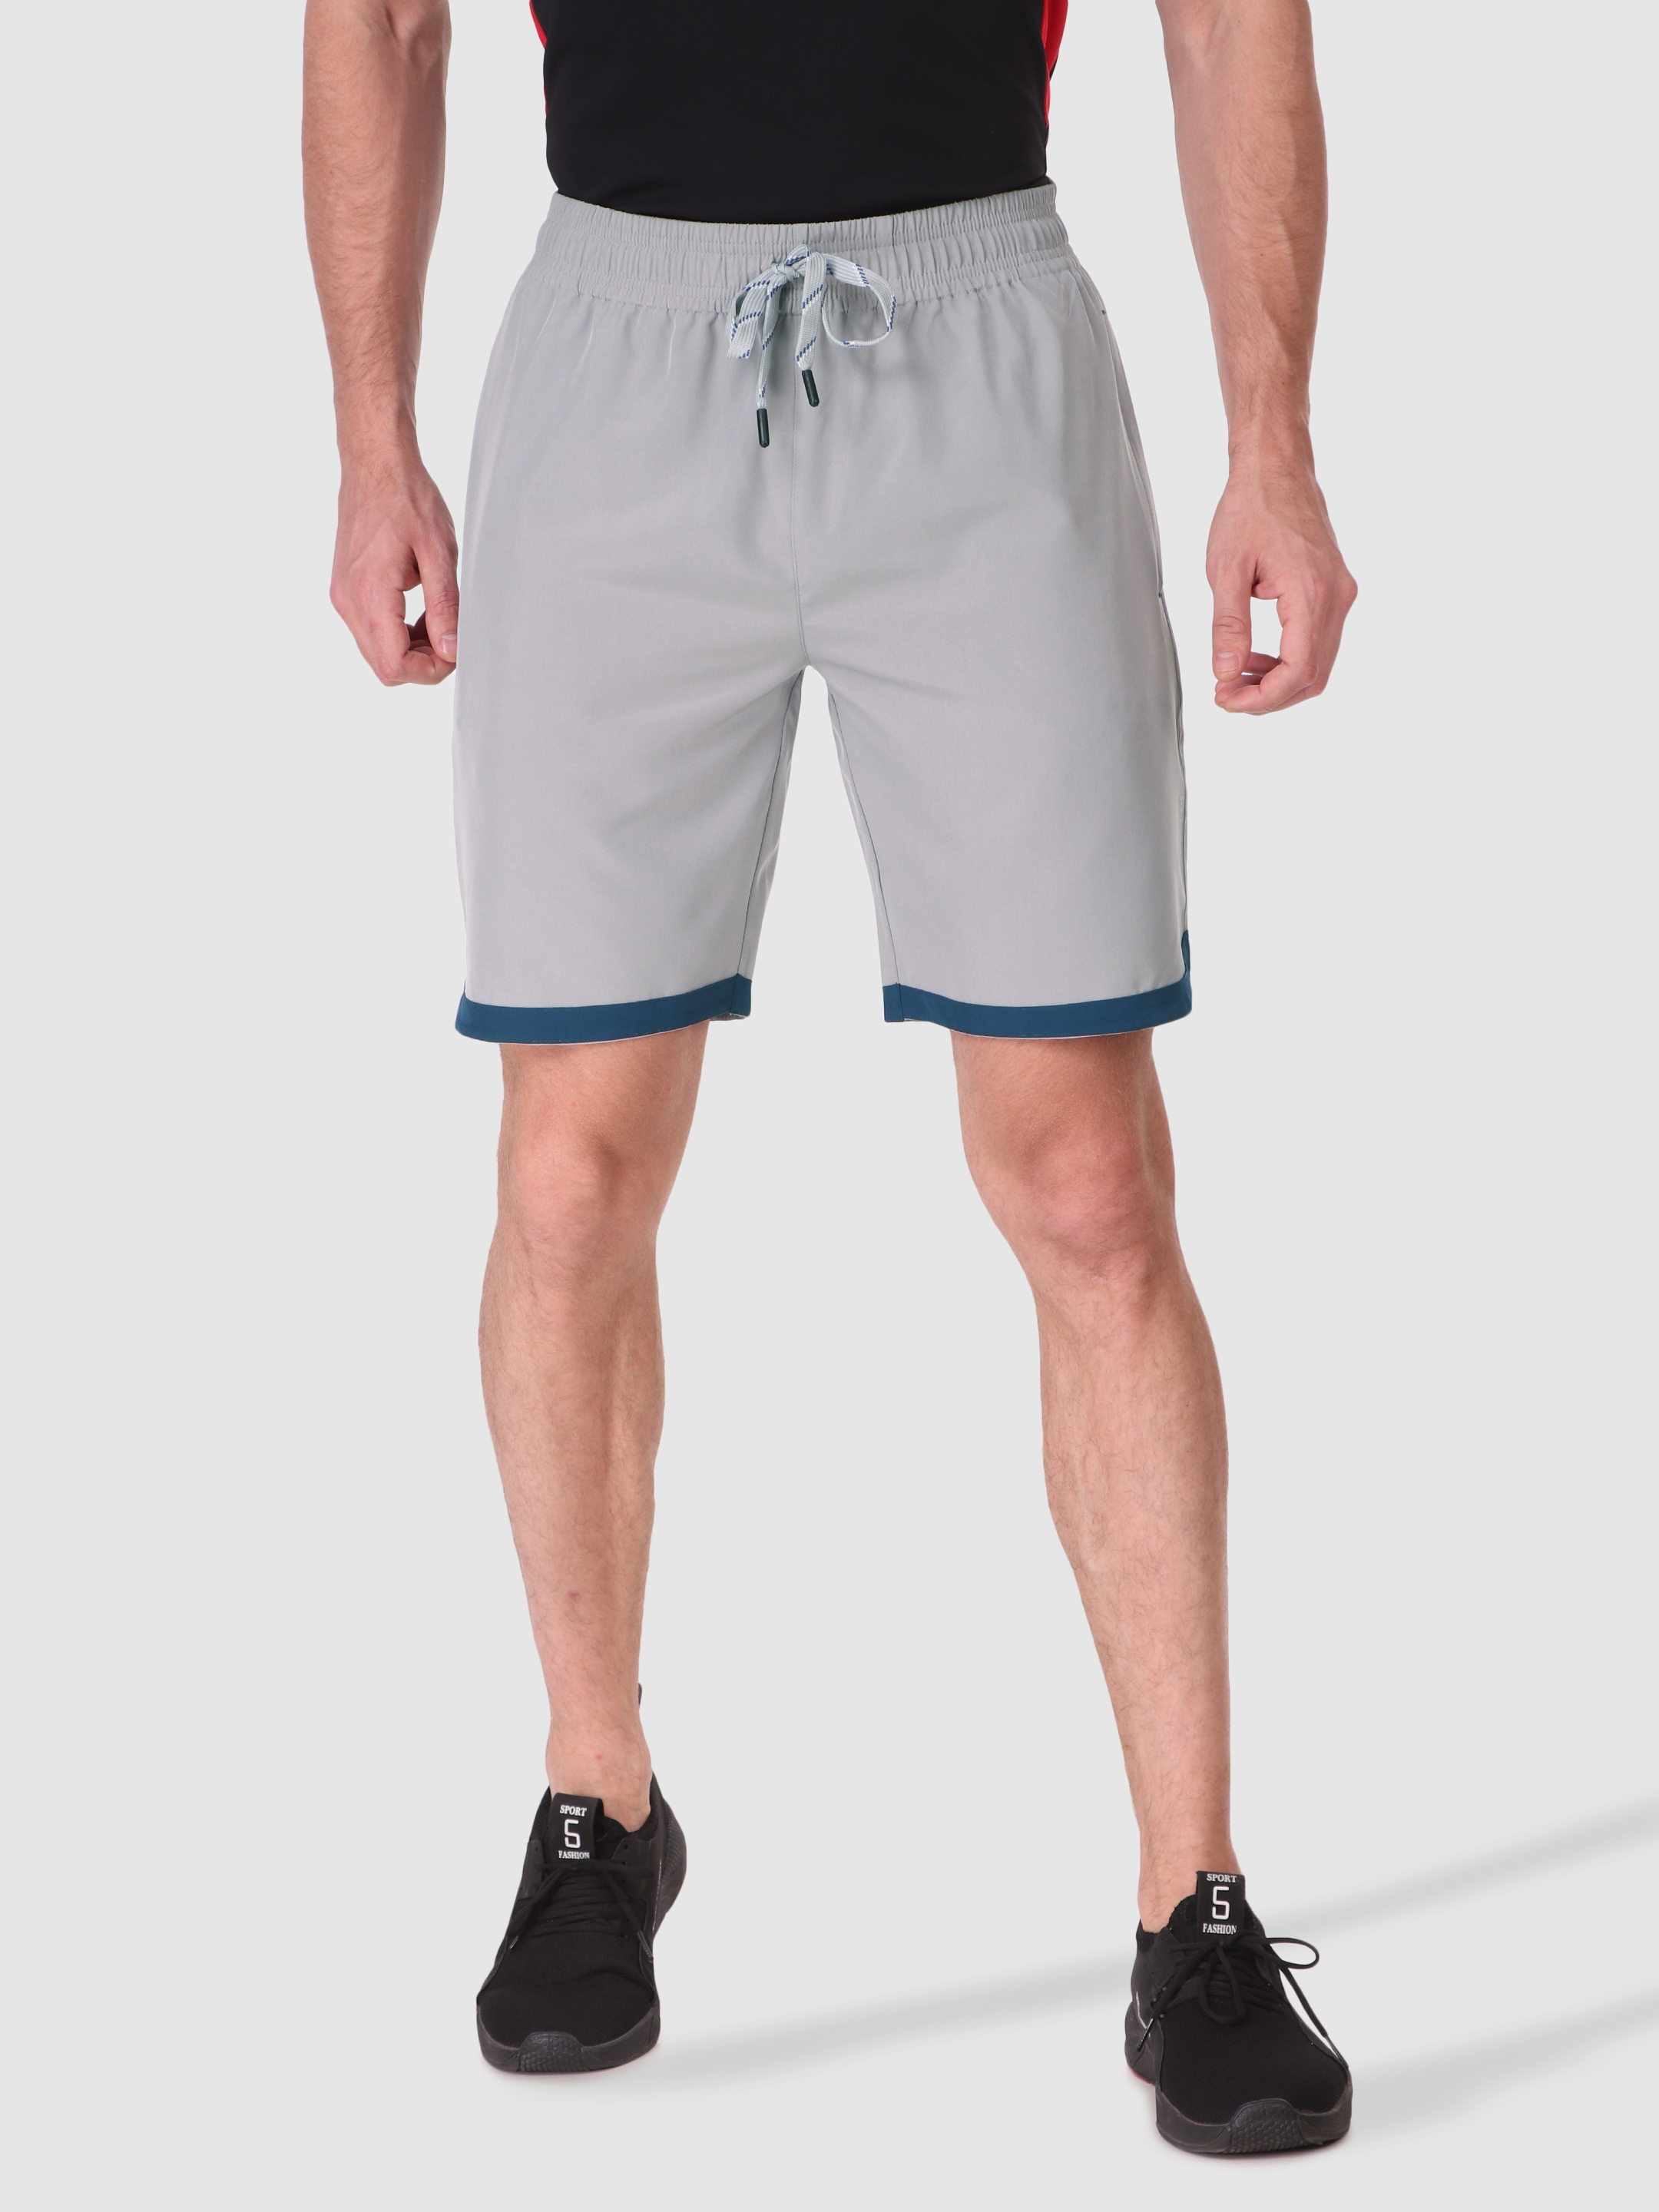 Fitinc | Fitinc N.S Lycra Light Grey Shorts for Men with Zipper Pockets & Knee Design